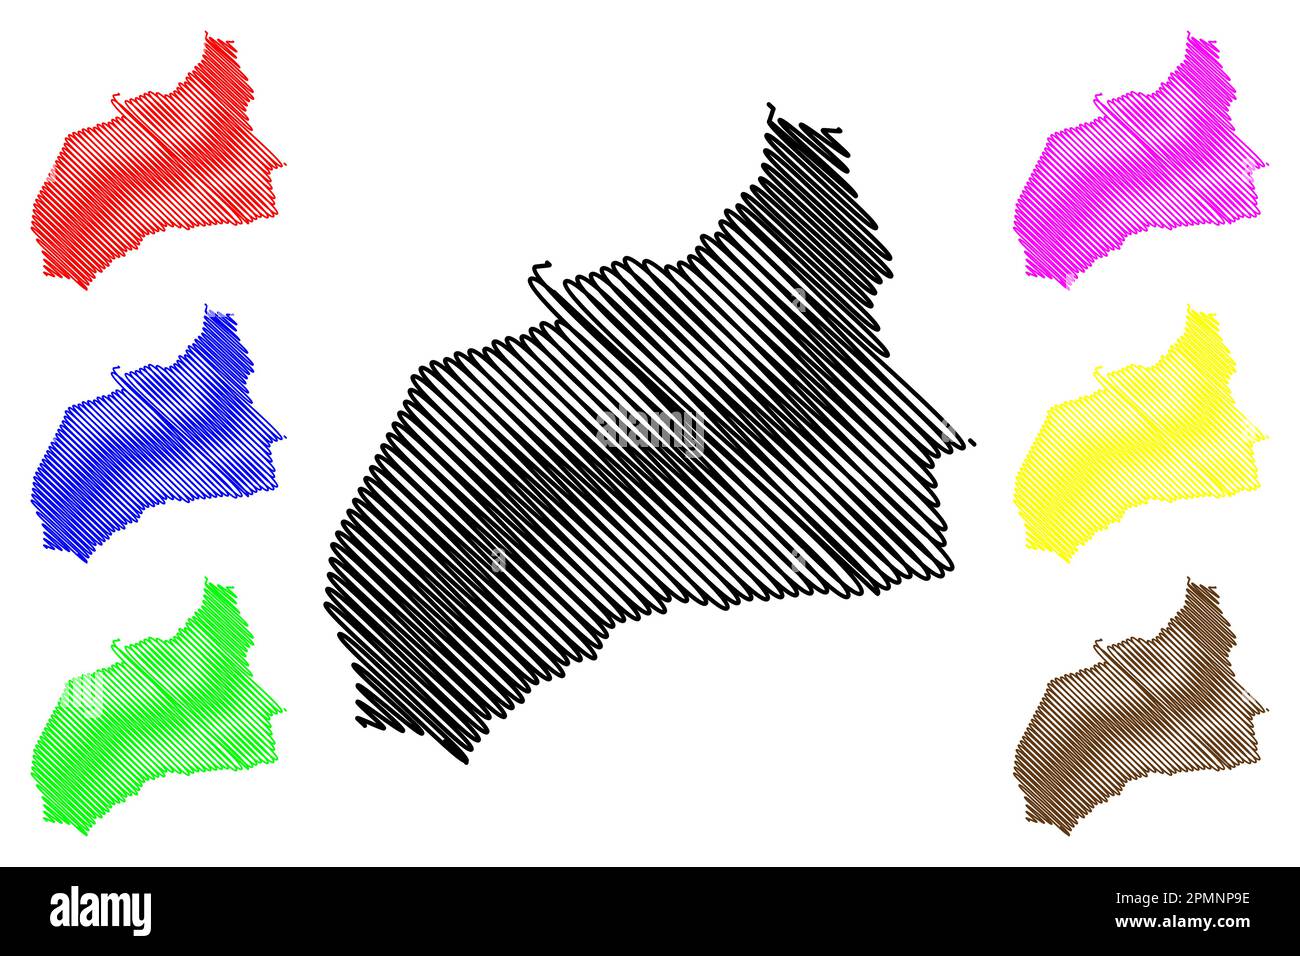 Lavras da Mangabeira municipality (Ceará state, Municipalities of Brazil, Federative Republic of Brazil) map vector illustration, scribble sketch Lavr Stock Vector